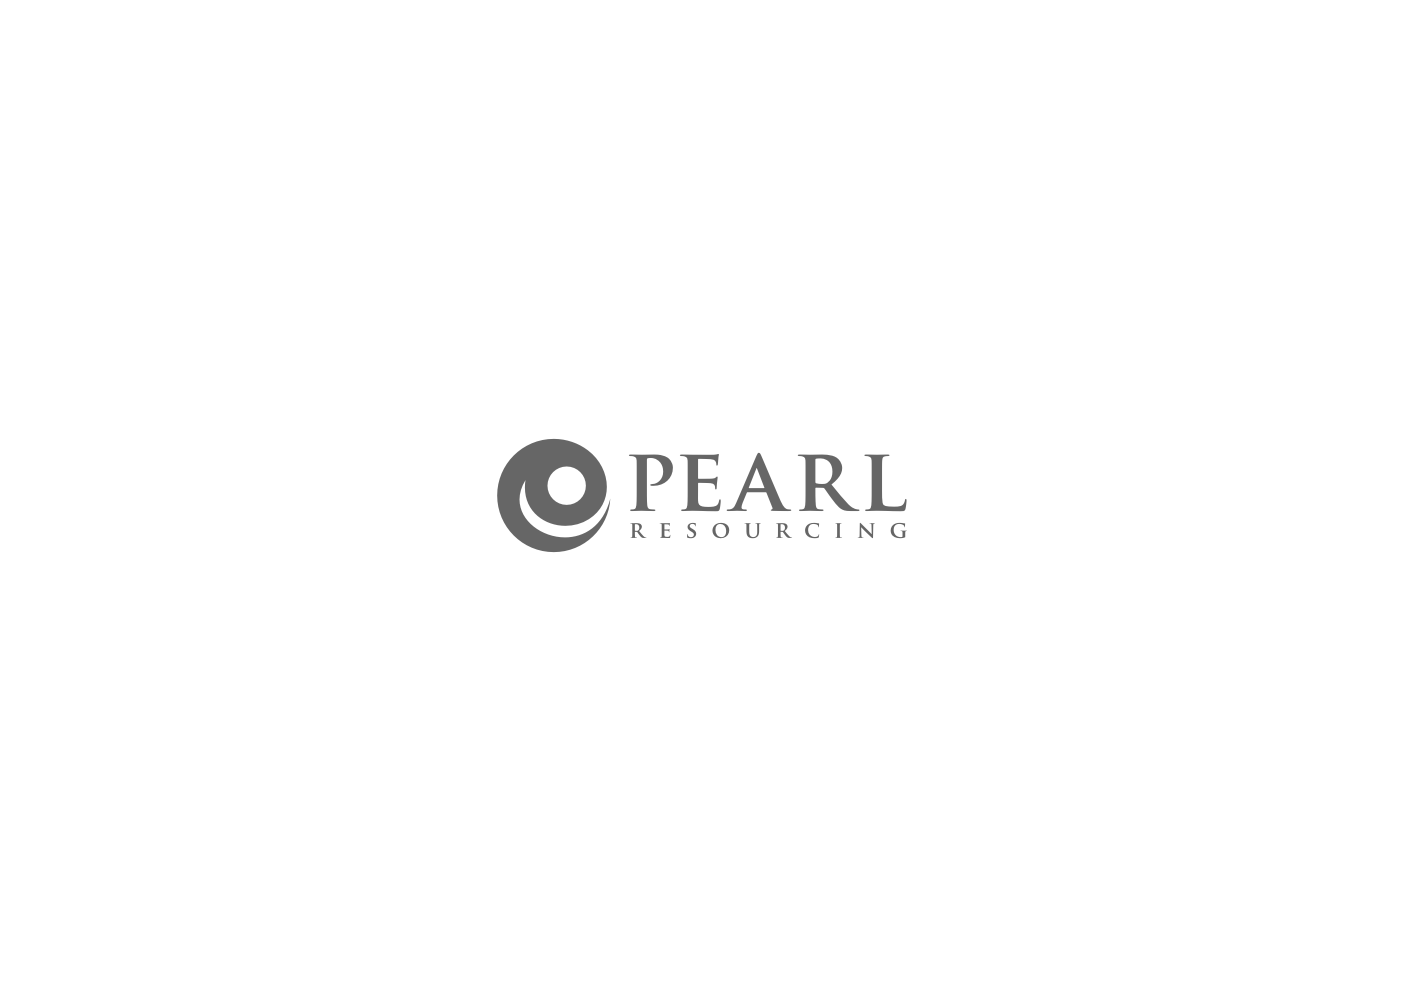 Pearl Logo - Modern, Masculine Logo Design for Pearl Resourcing by karin | Design ...